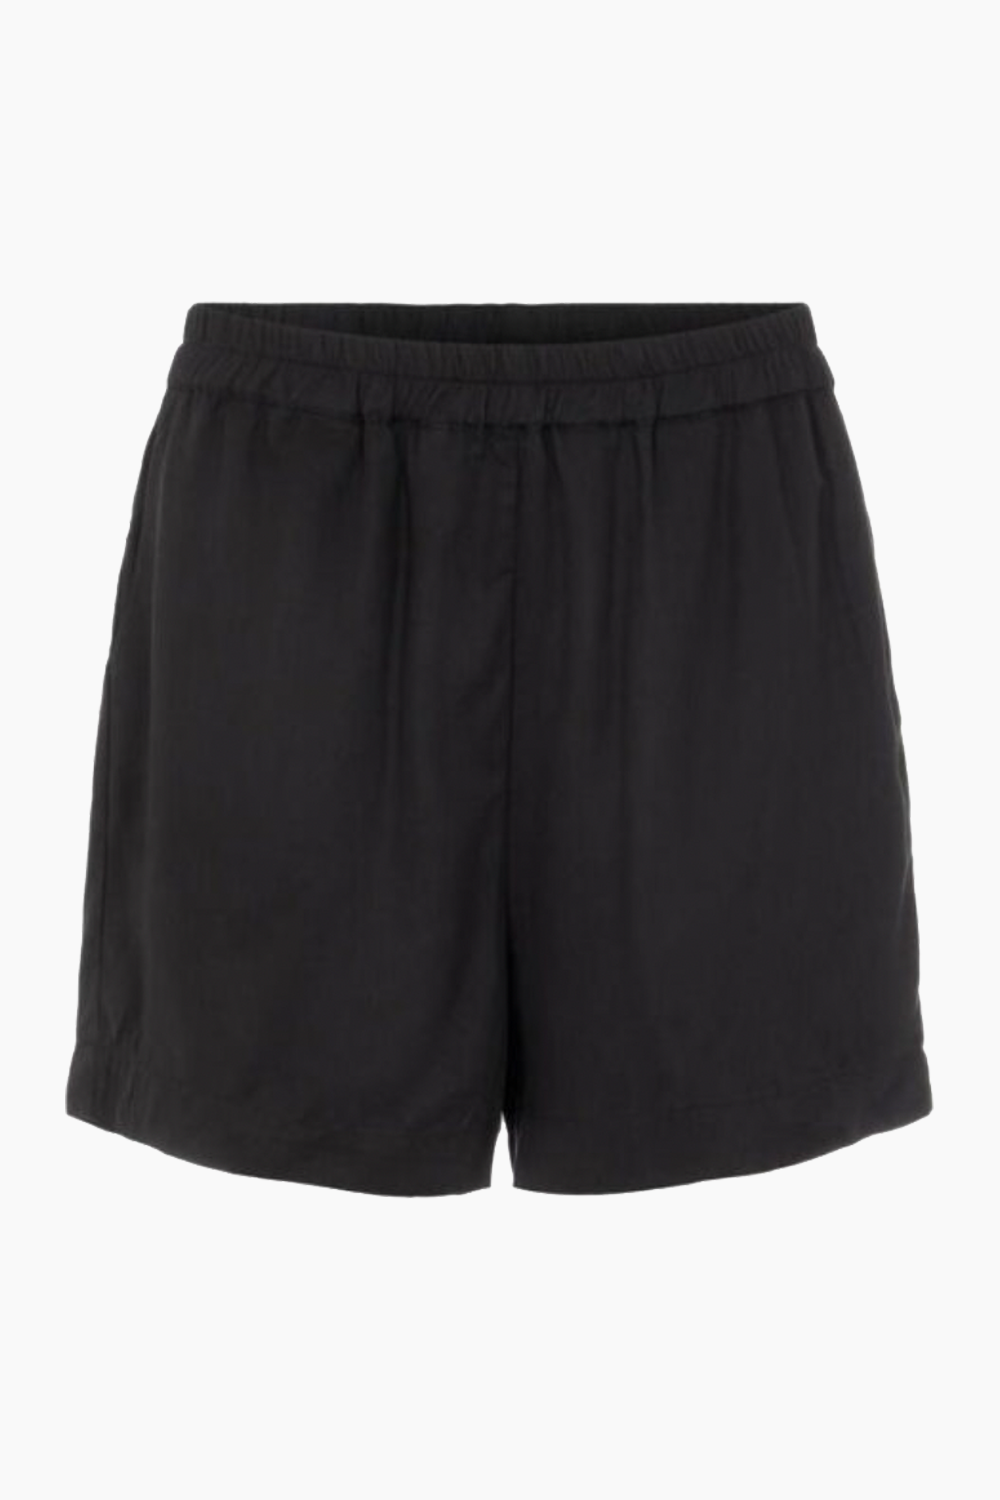 Se ObjTilda Hw Shorts Noos - Black - Object - Sort XS hos QNTS.dk